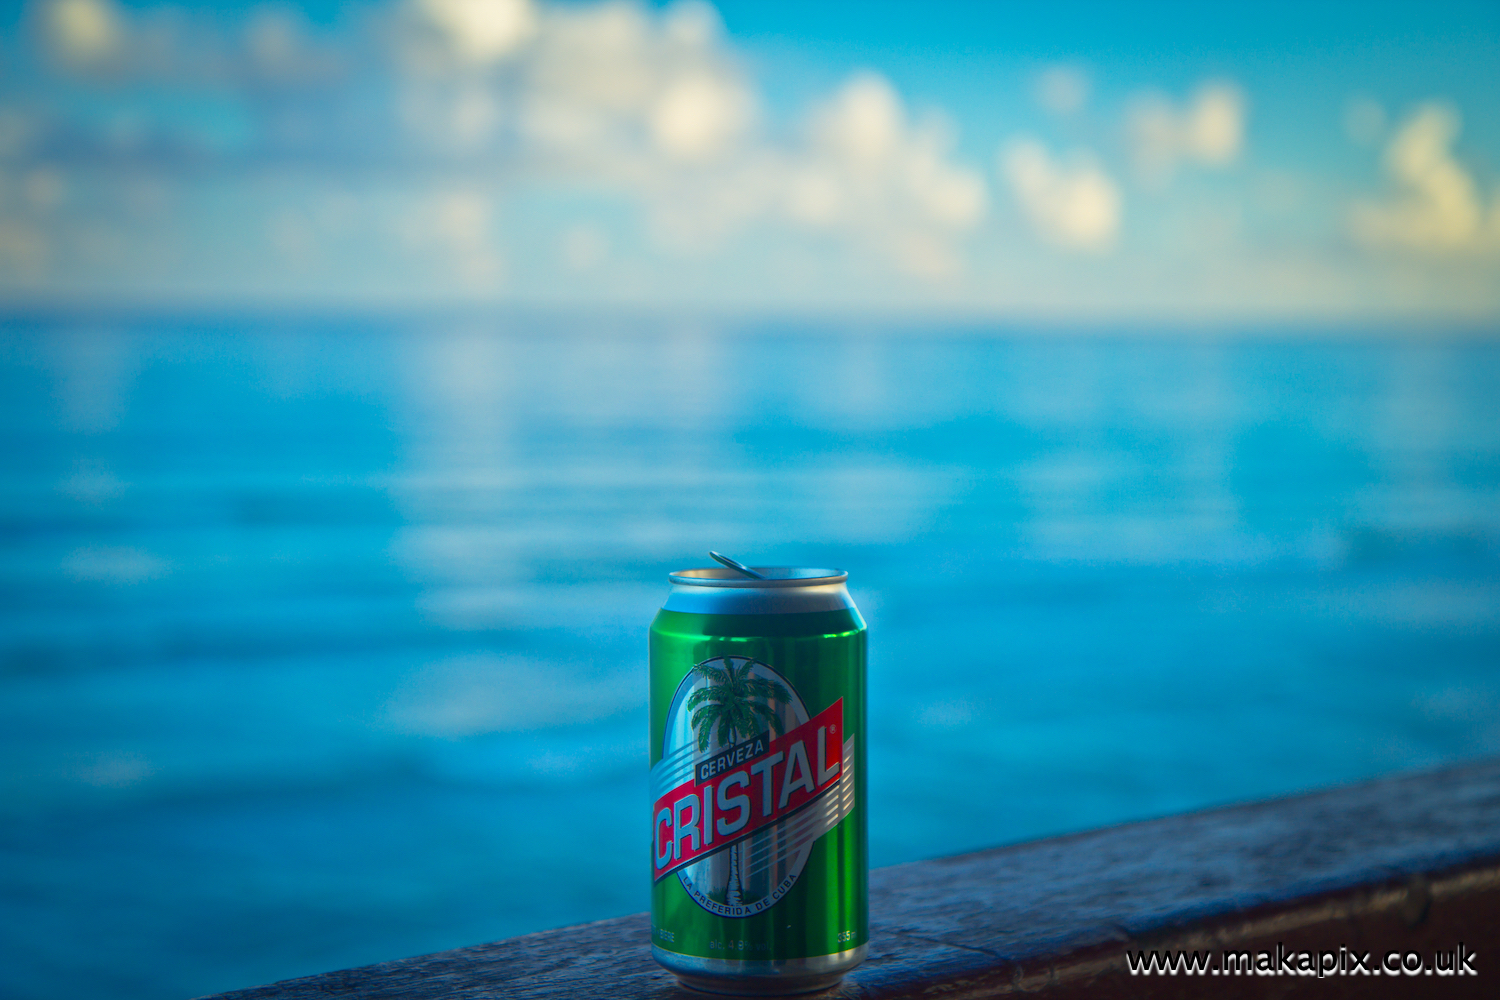 Cristal beer, Varadero, Matanzas, Cuba